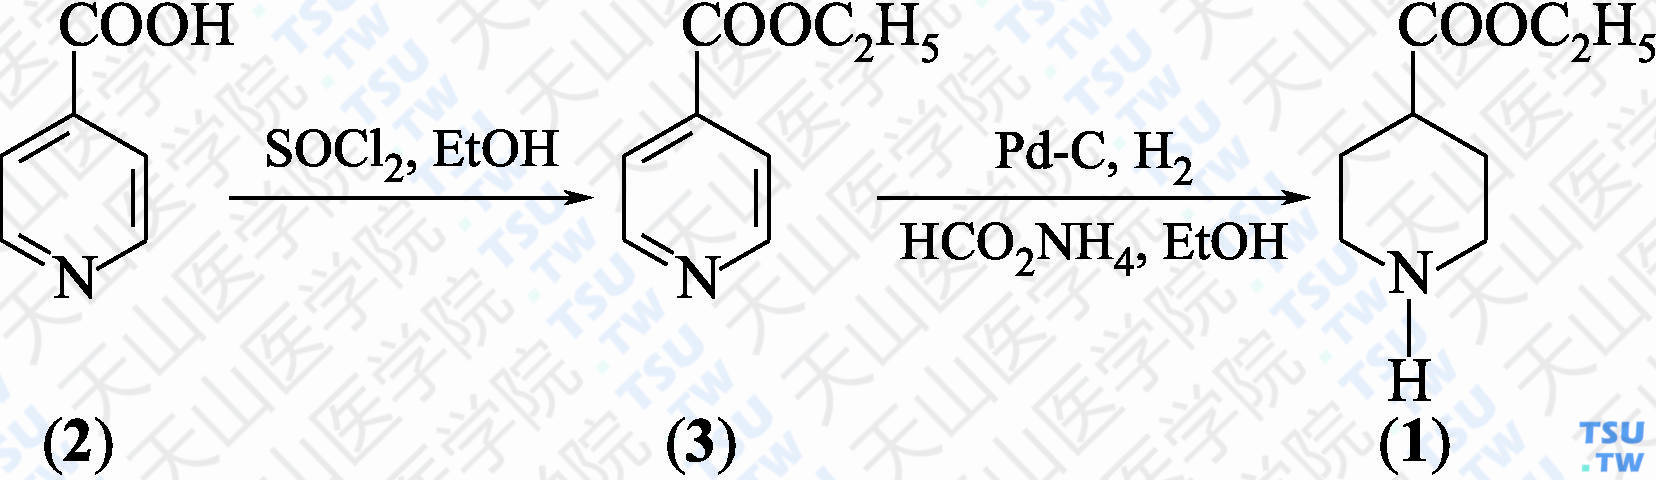 4-哌啶甲酸乙酯（分子式：C<sub>8</sub>H<sub>15</sub>NO<sub>2</sub>）的合成方法路线及其结构式